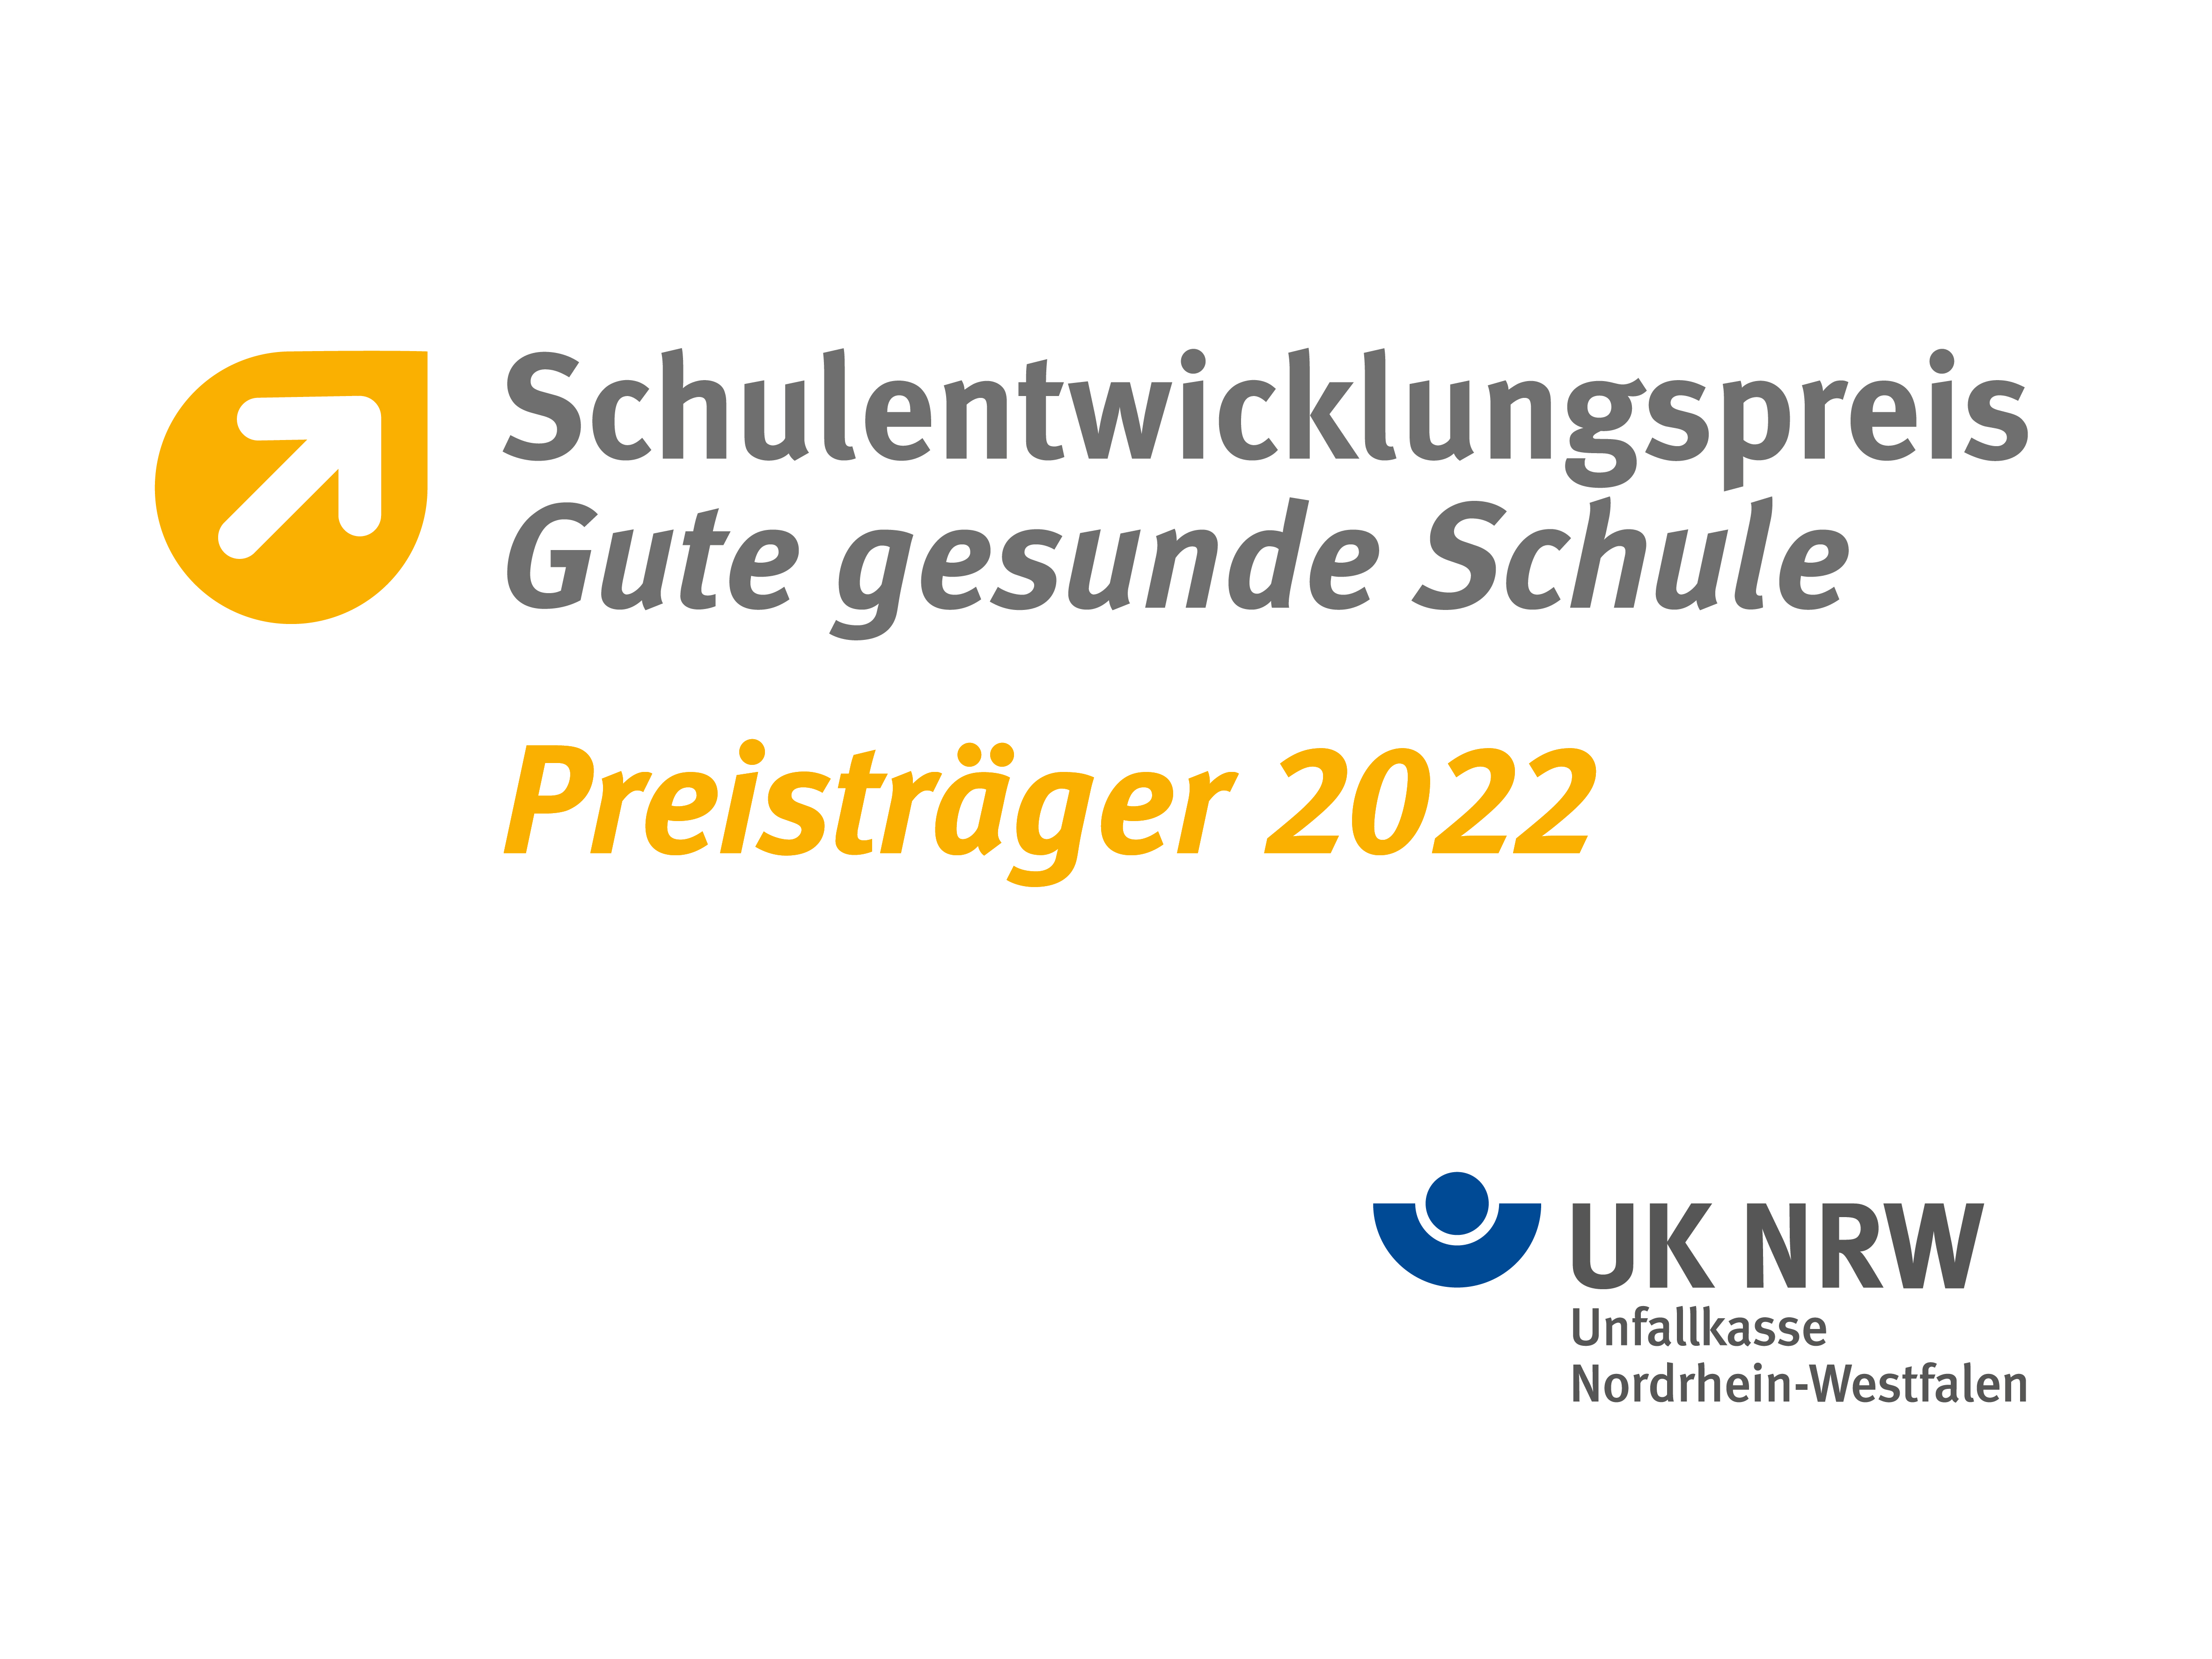 UK NRW Schulentwicklungspreis Logo 2022 Rahmen gross